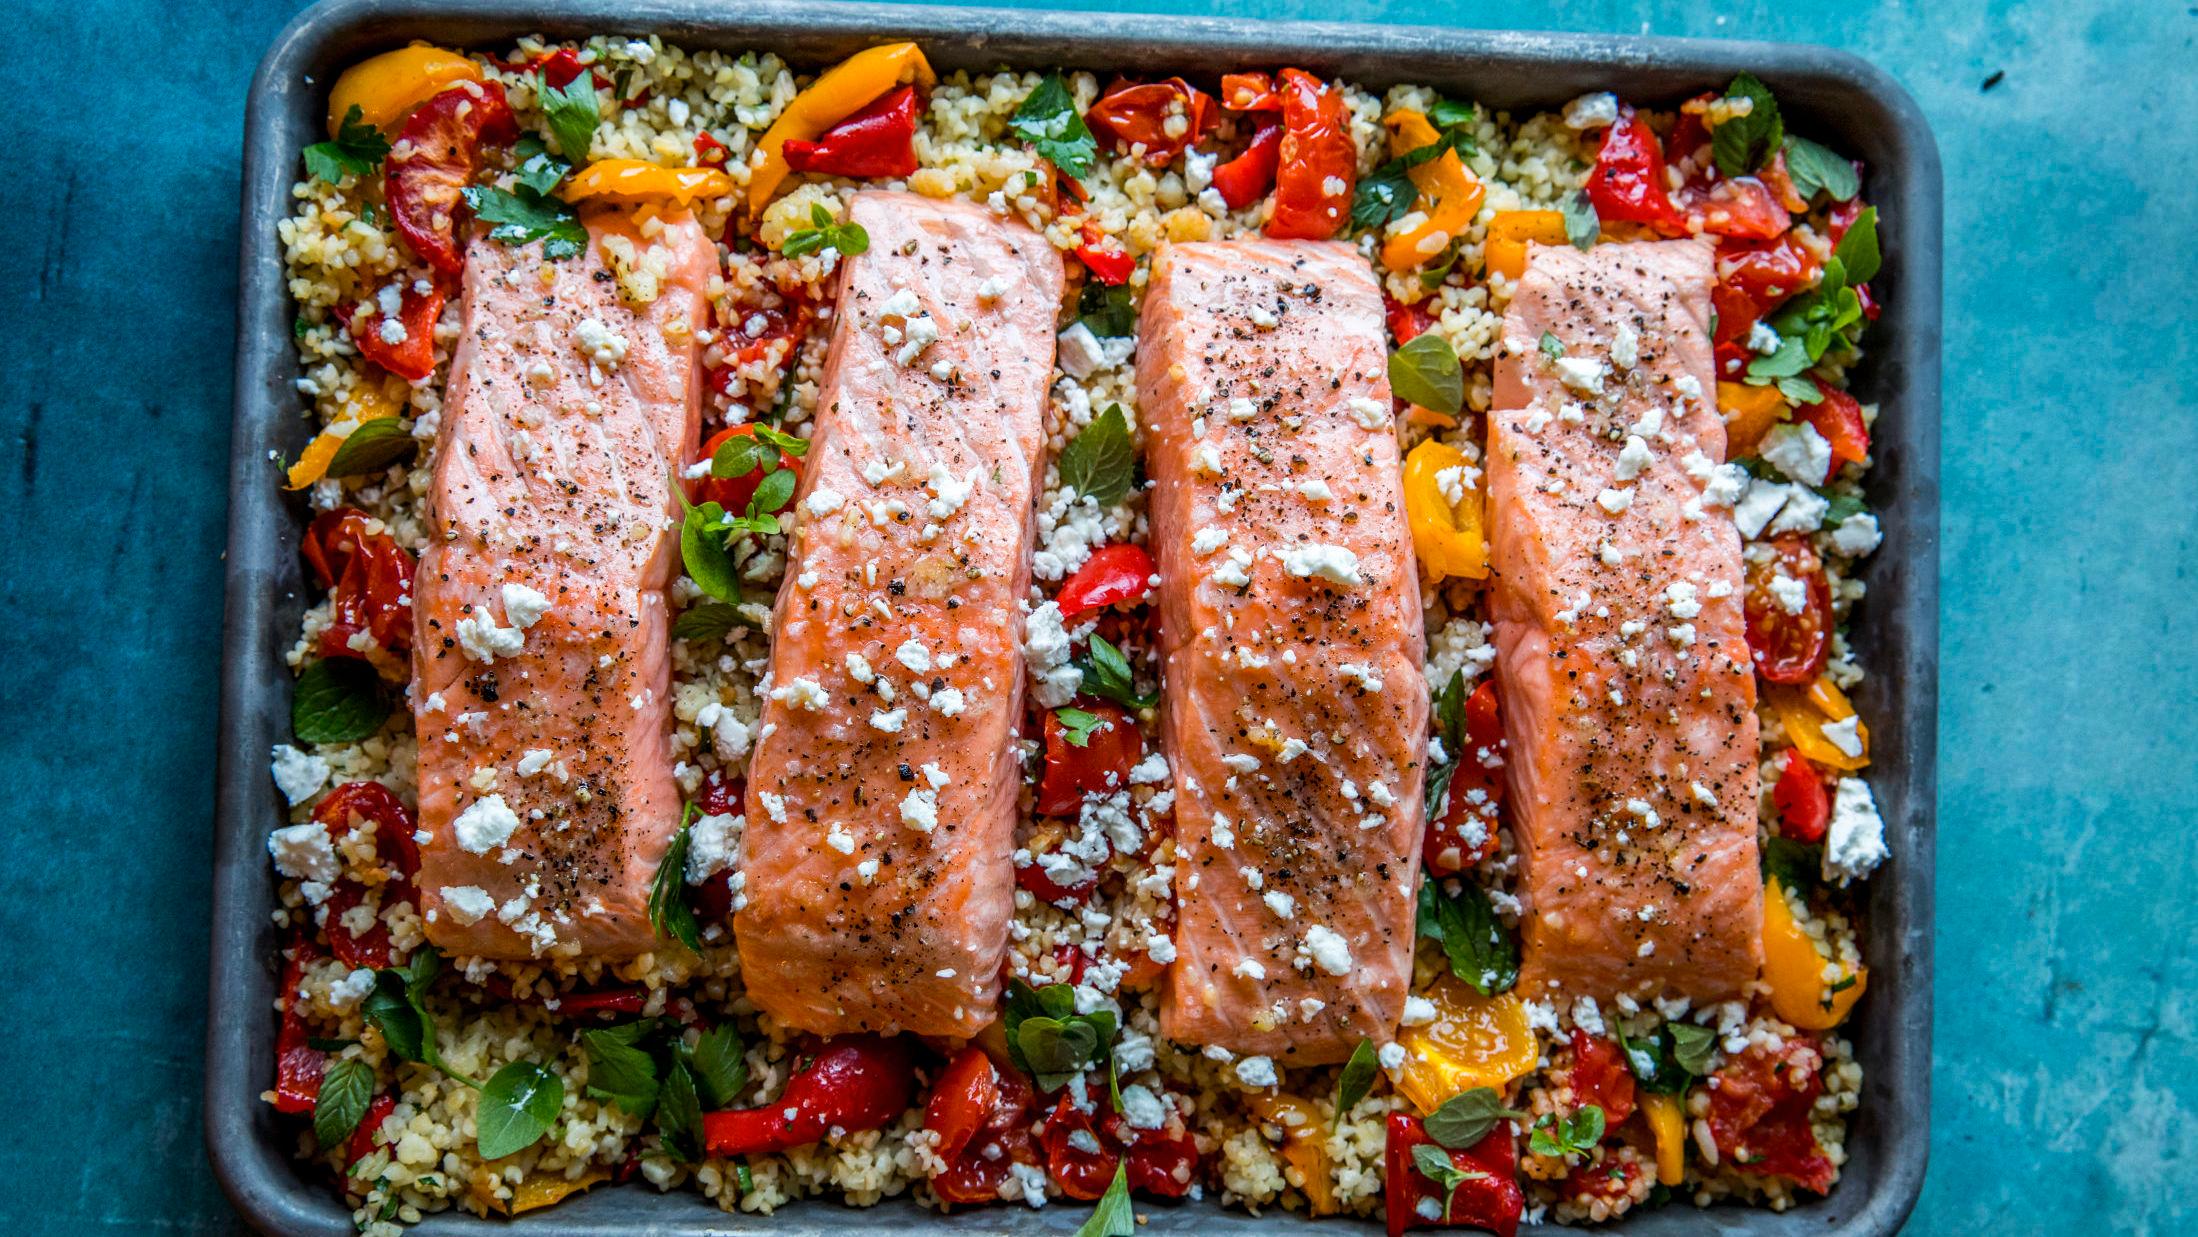 ALT I EN FORM: Det er enkel å lage middag når man kan slenge alt i en form, og steke det hele i ovnen. Foto: Sara Johannessen Meek/VG